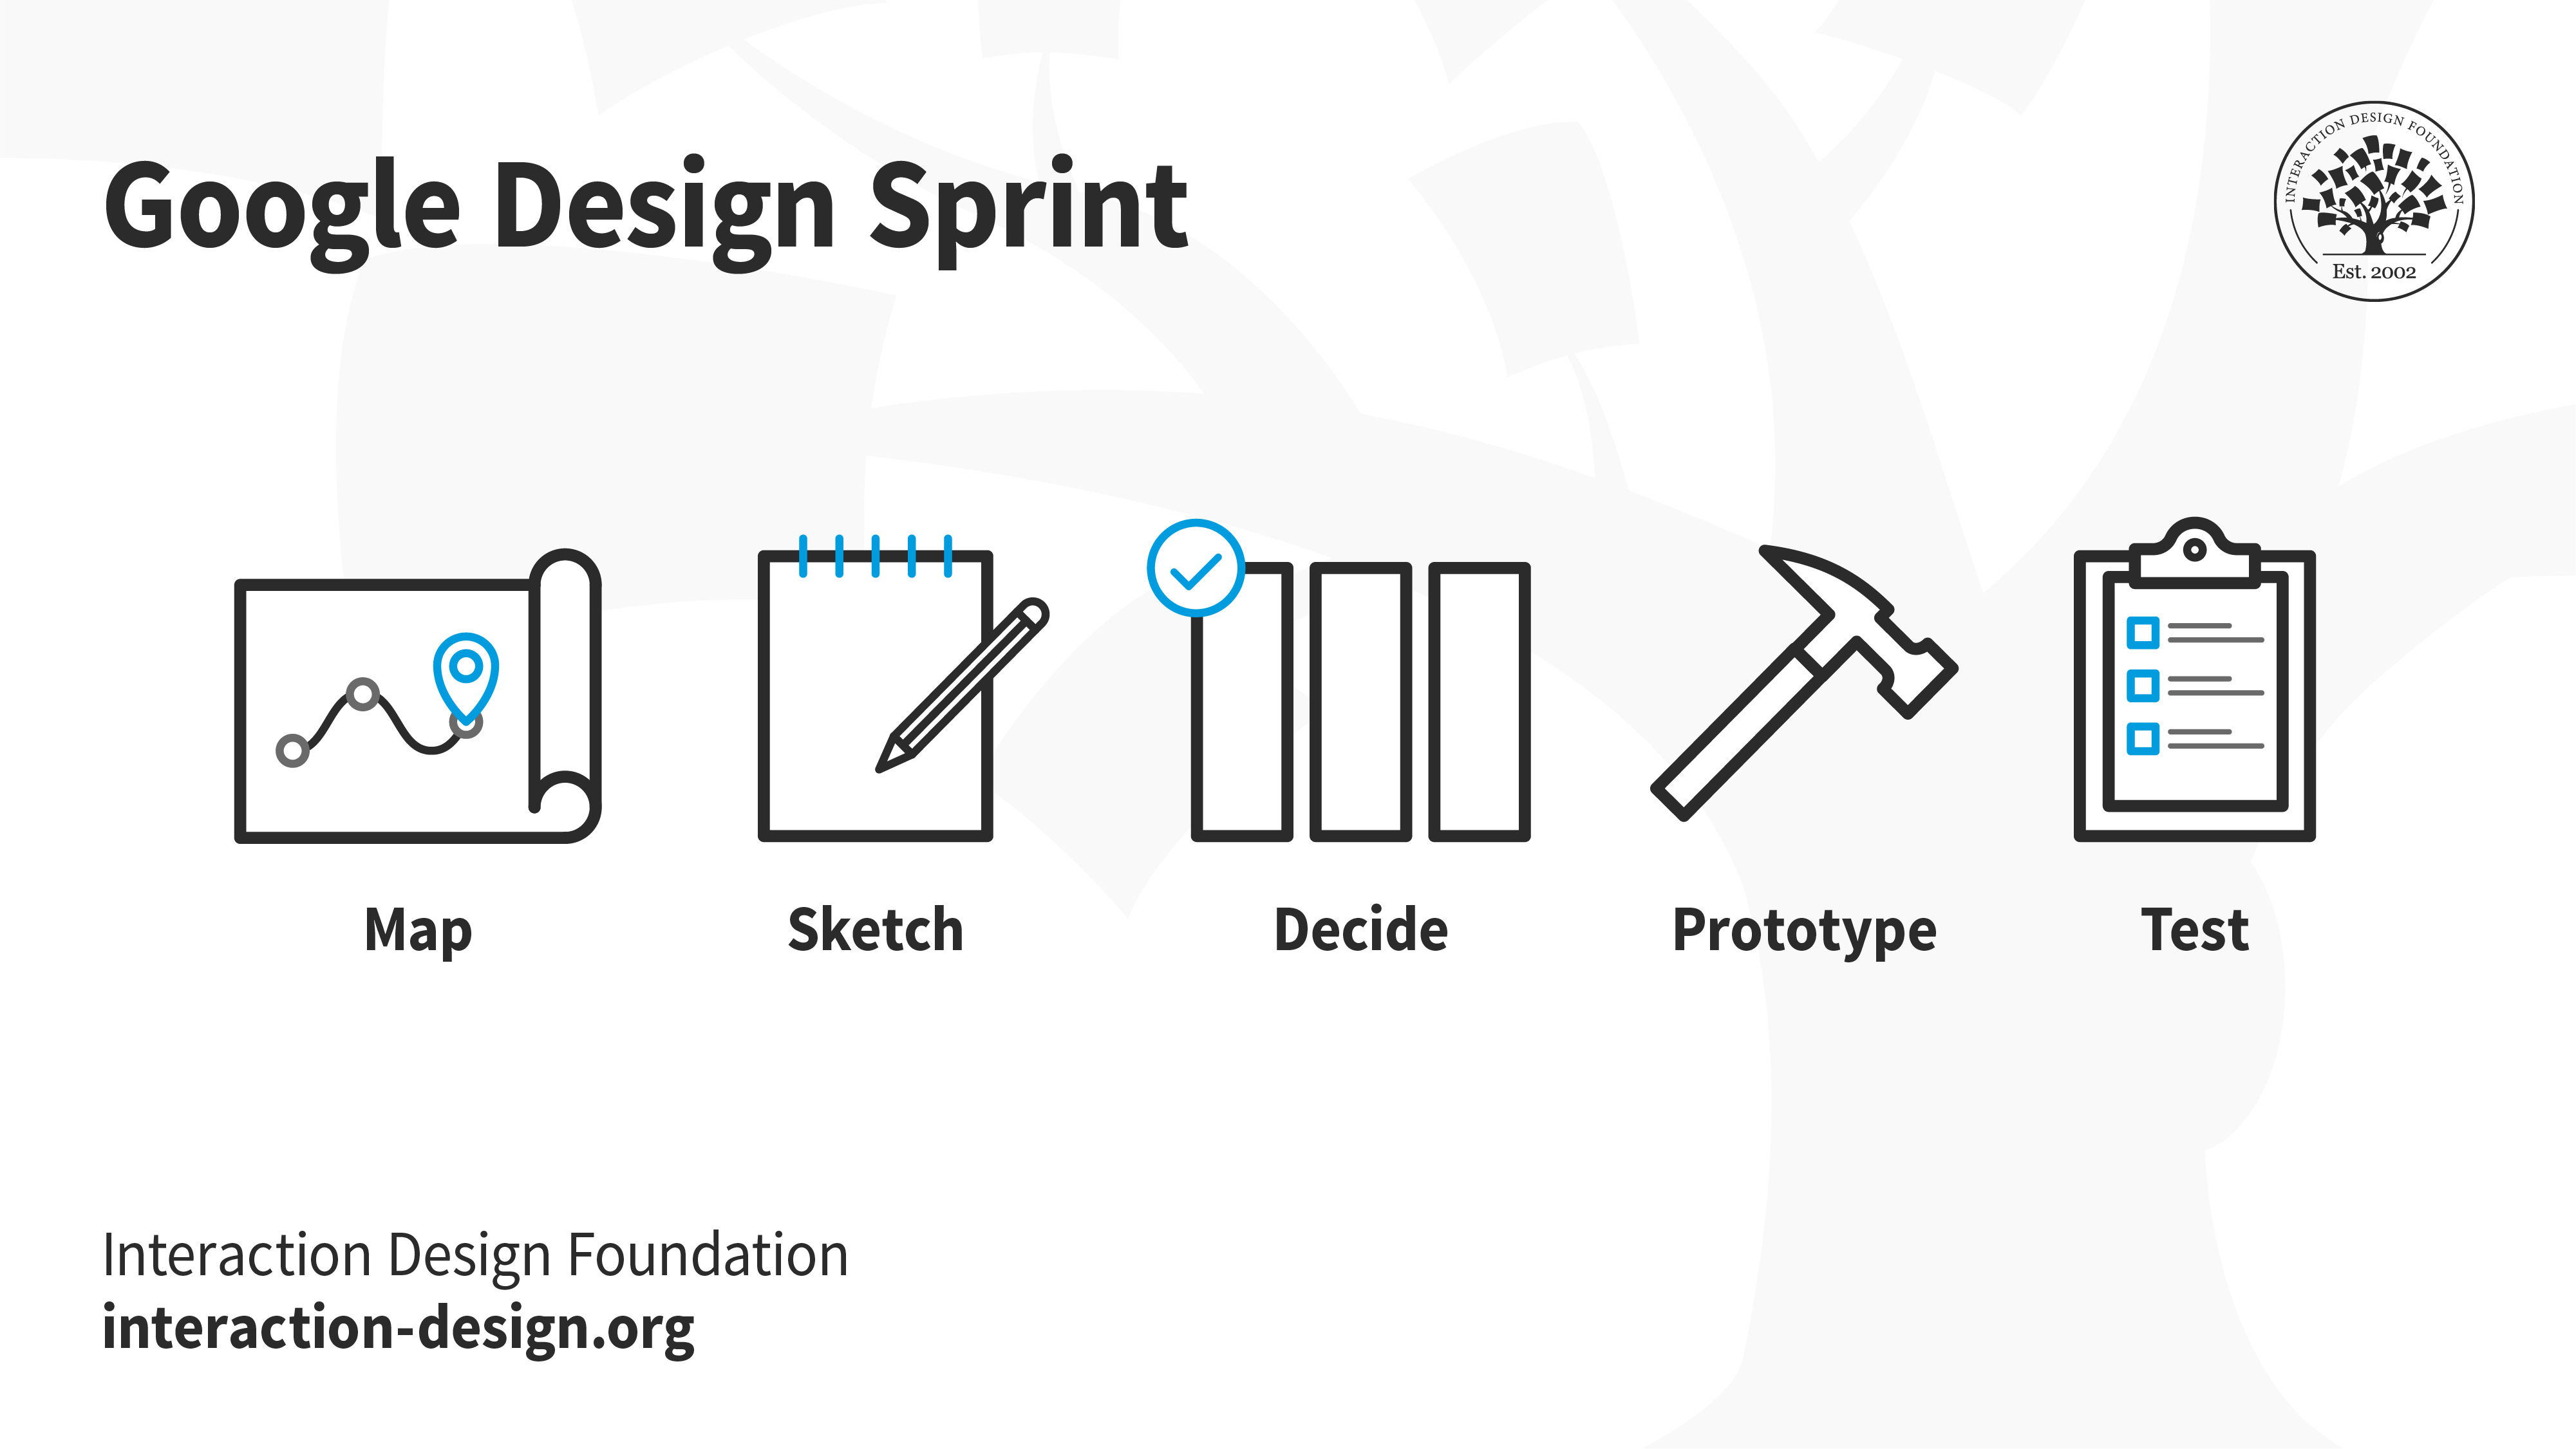 A diagram showing Google's Design Sprint.